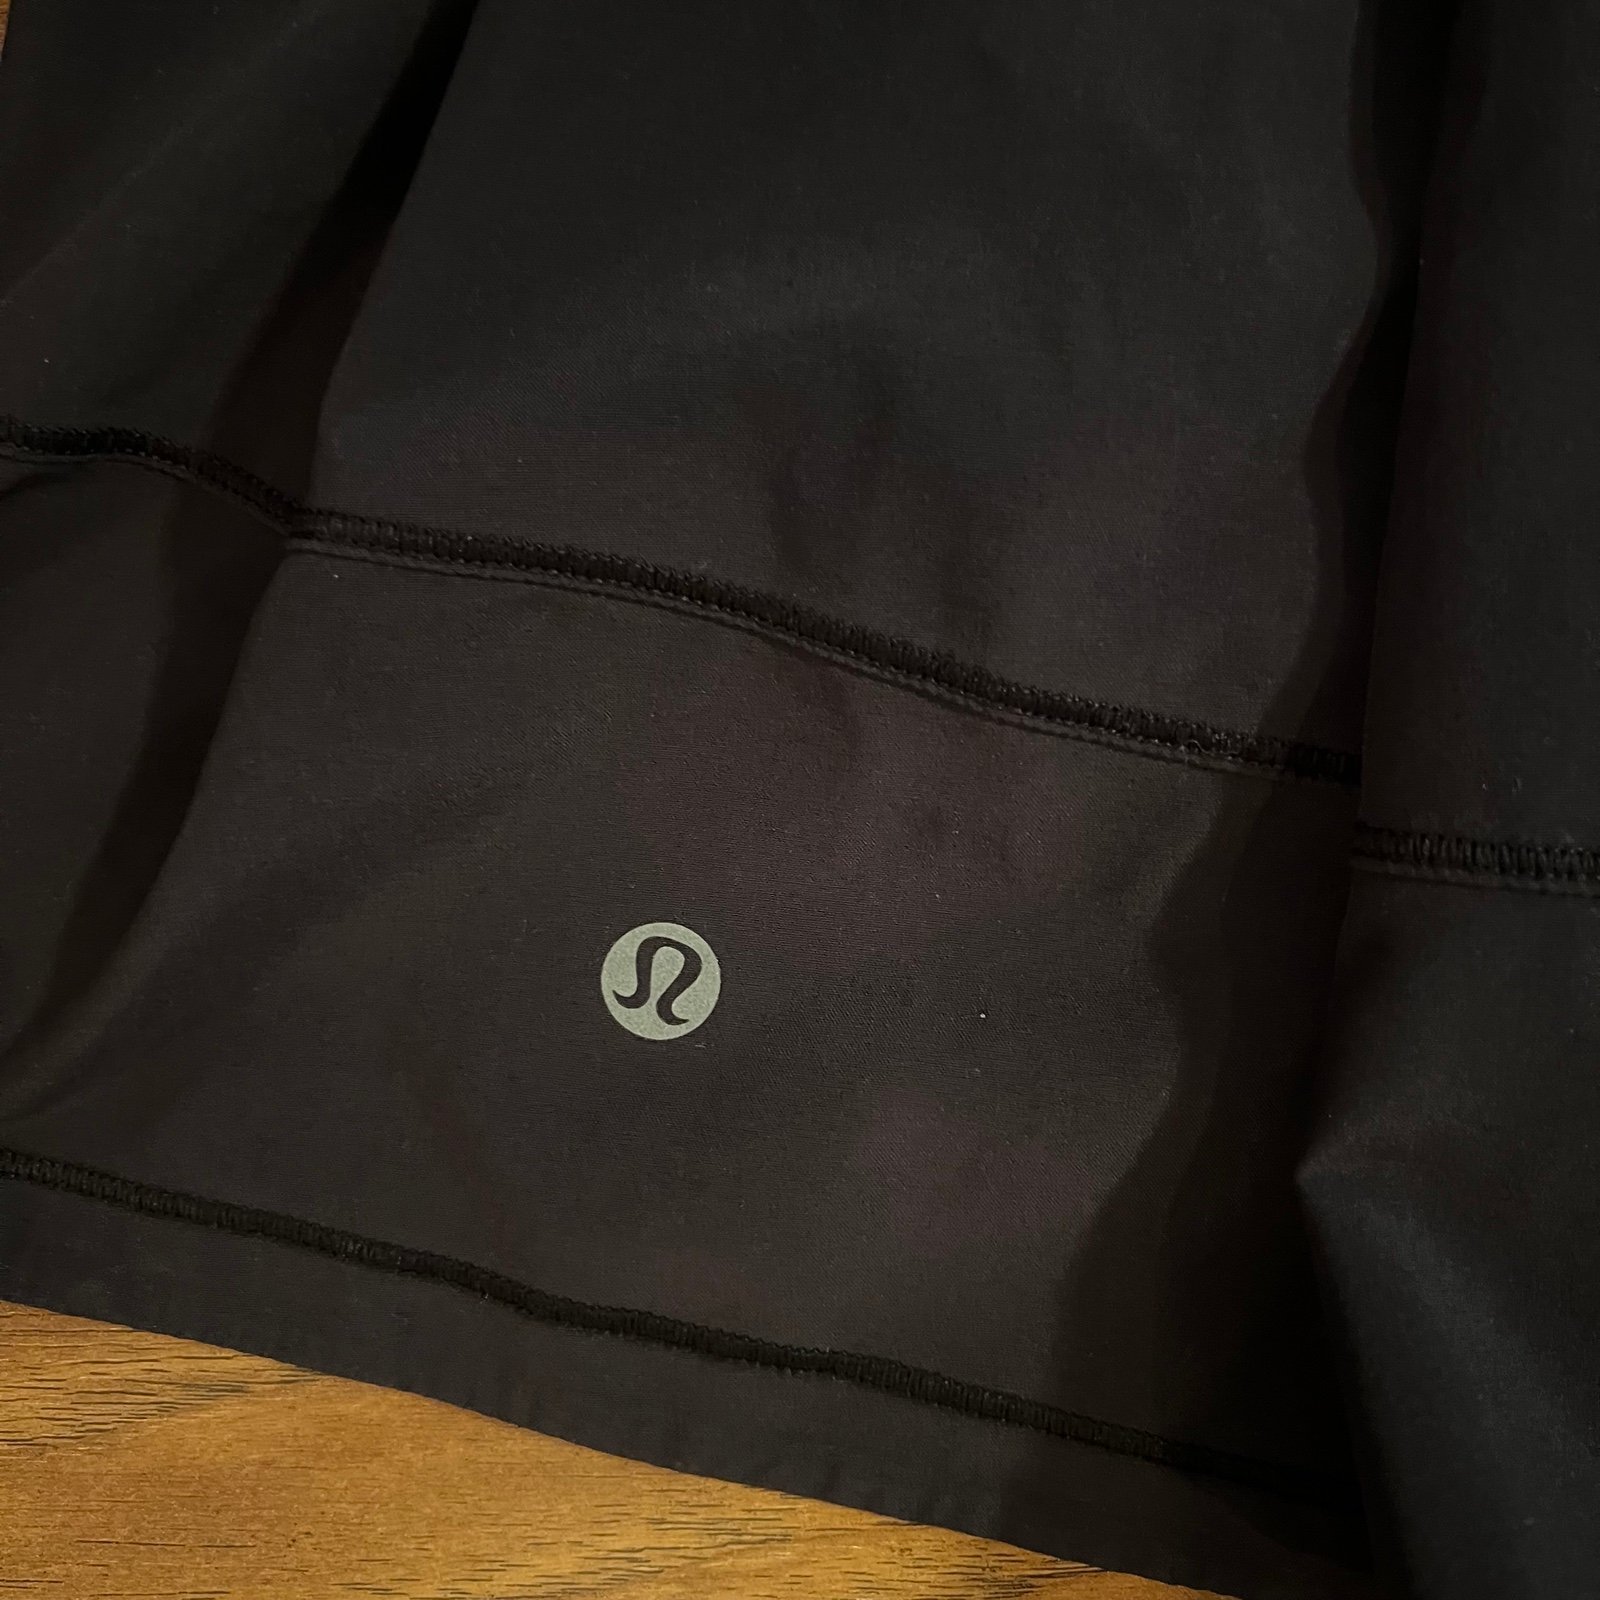 Factory Direct  Lululemon Pace Rival Mid-Rise Skirt Skort Black Size 6 N5zU9JTtq Hot Sale